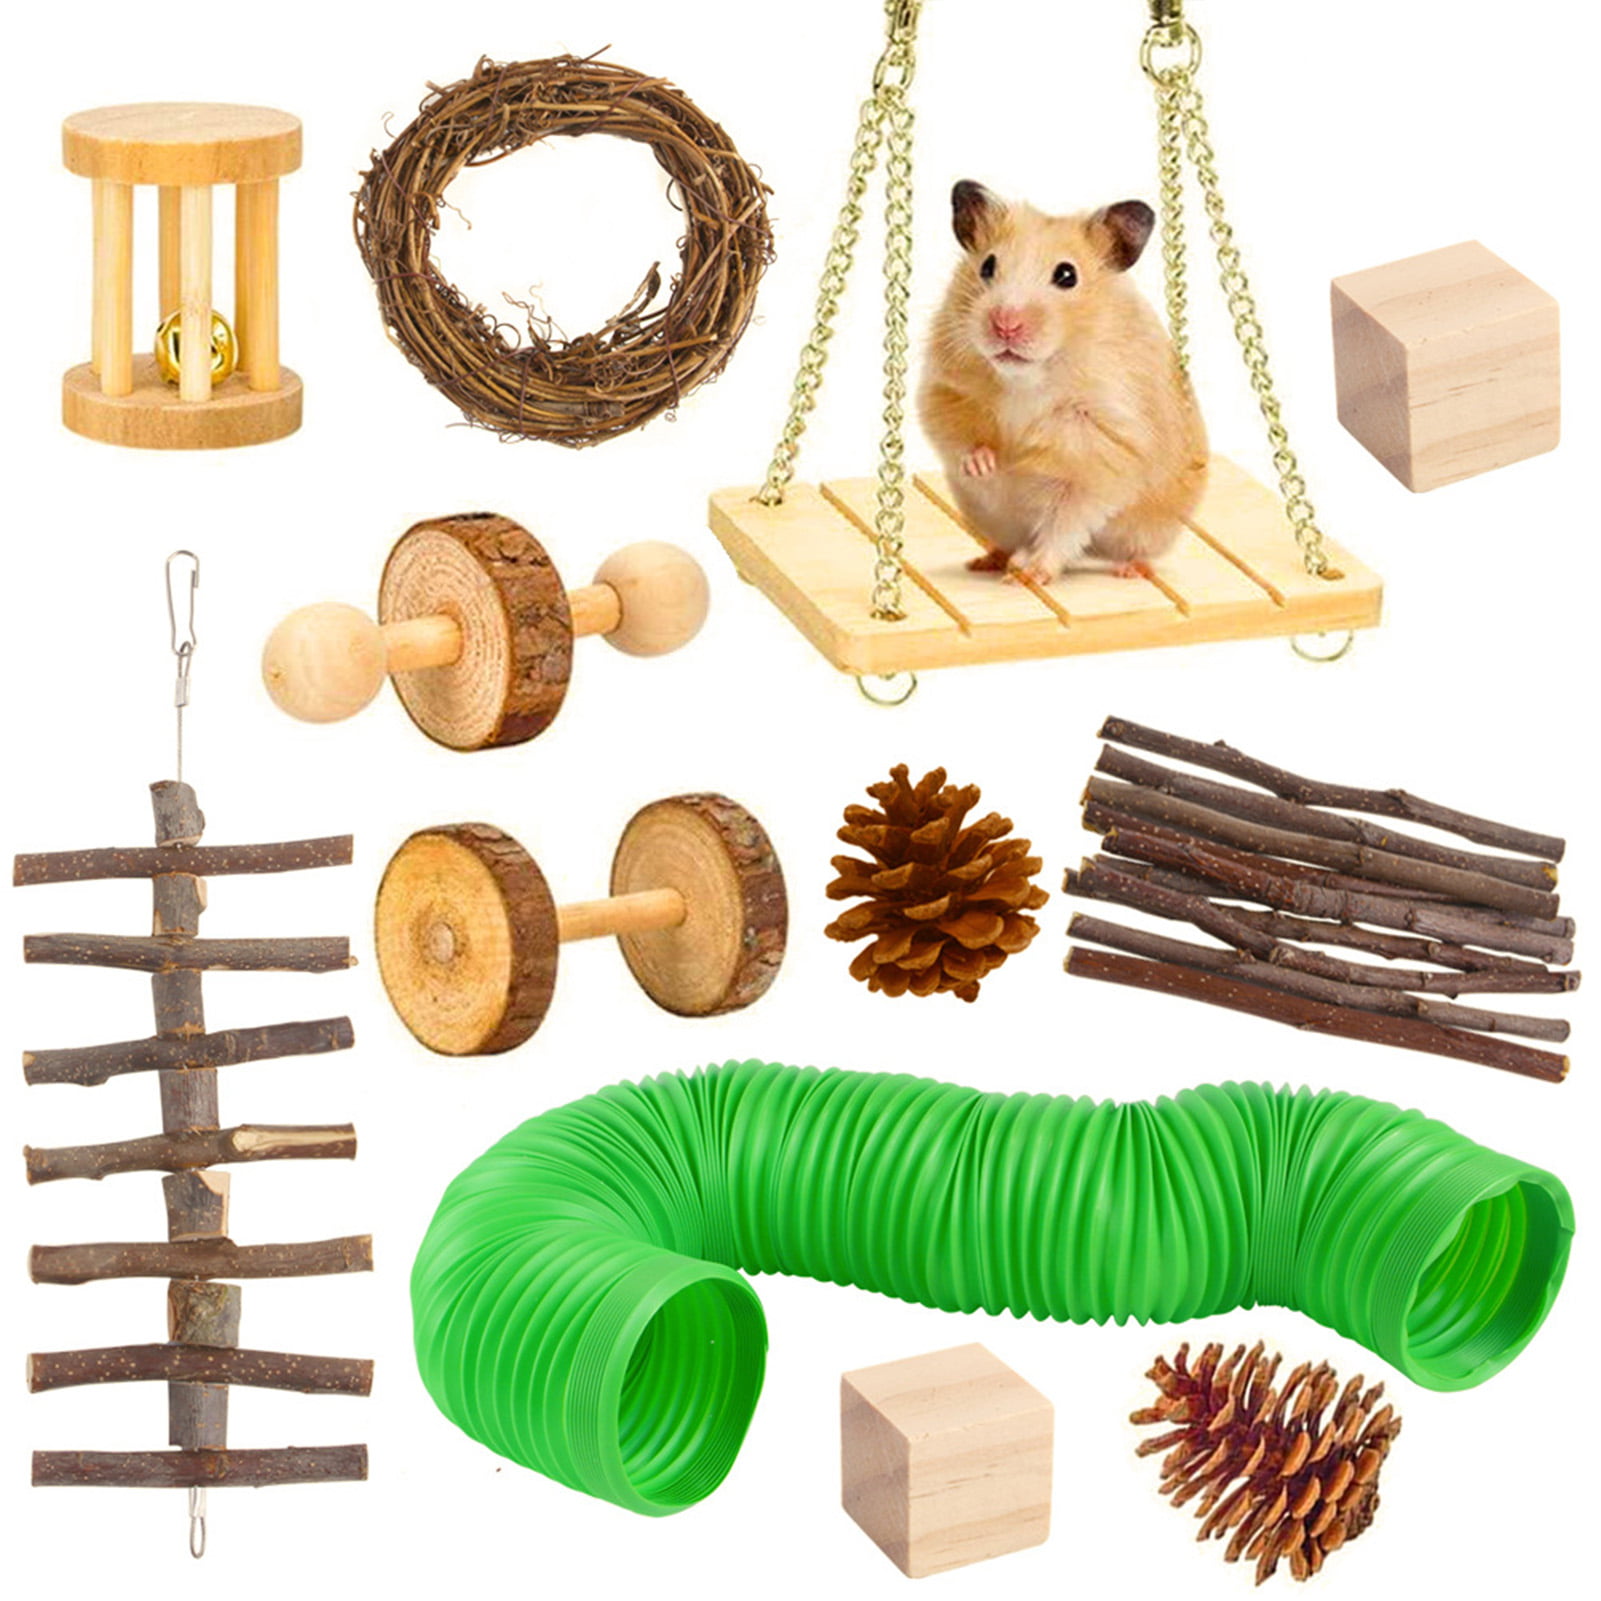 5. Kaytee Chew & Toy Box for Hamsters/Gerbils